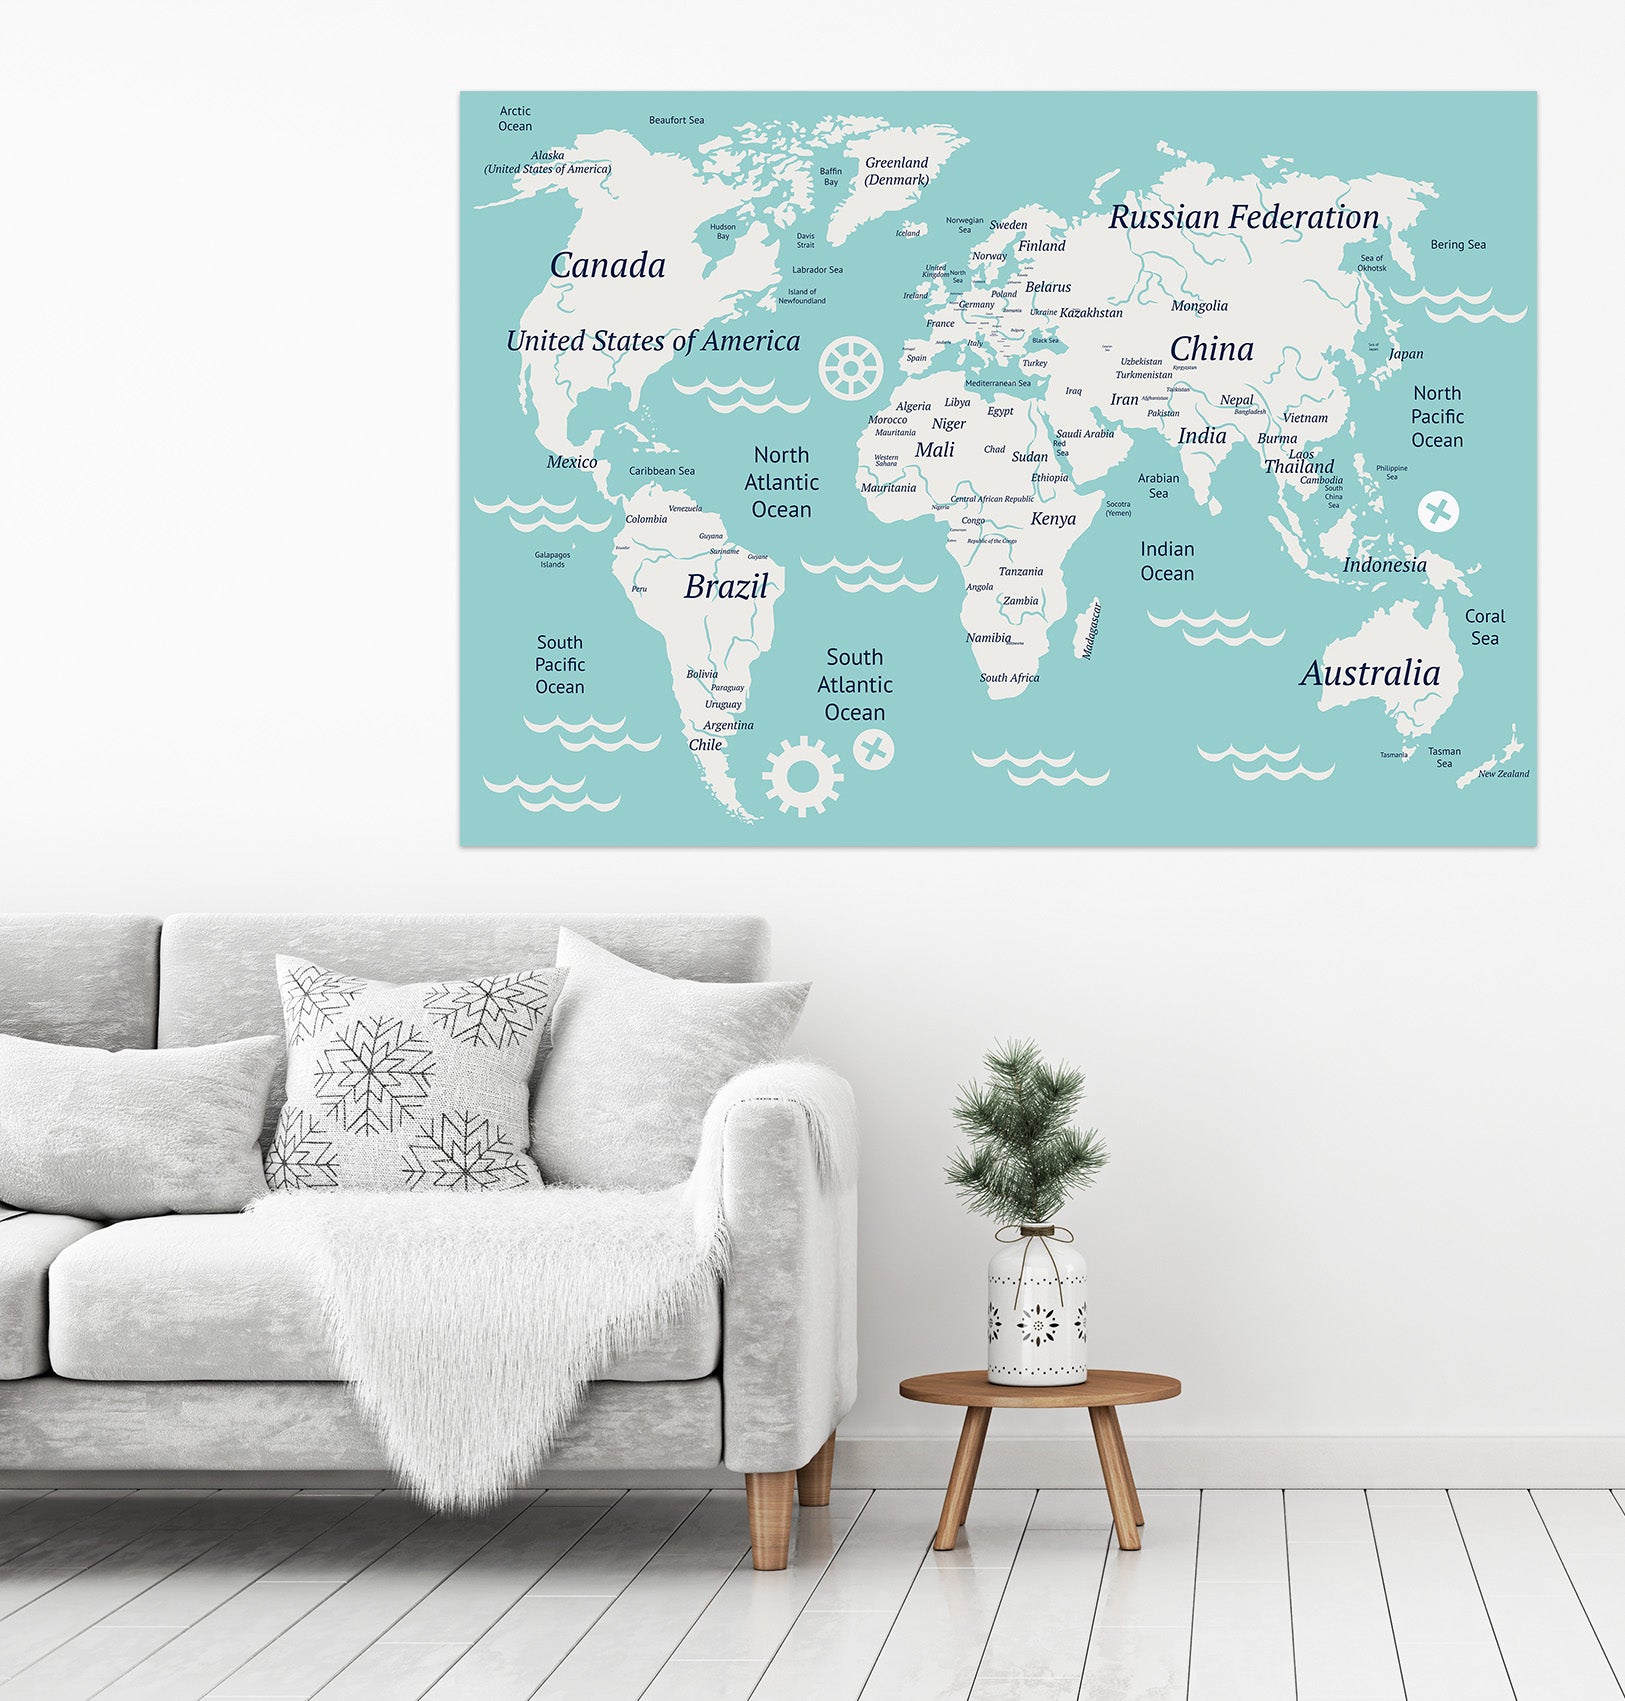 3D White Land 203 World Map Wall Sticker